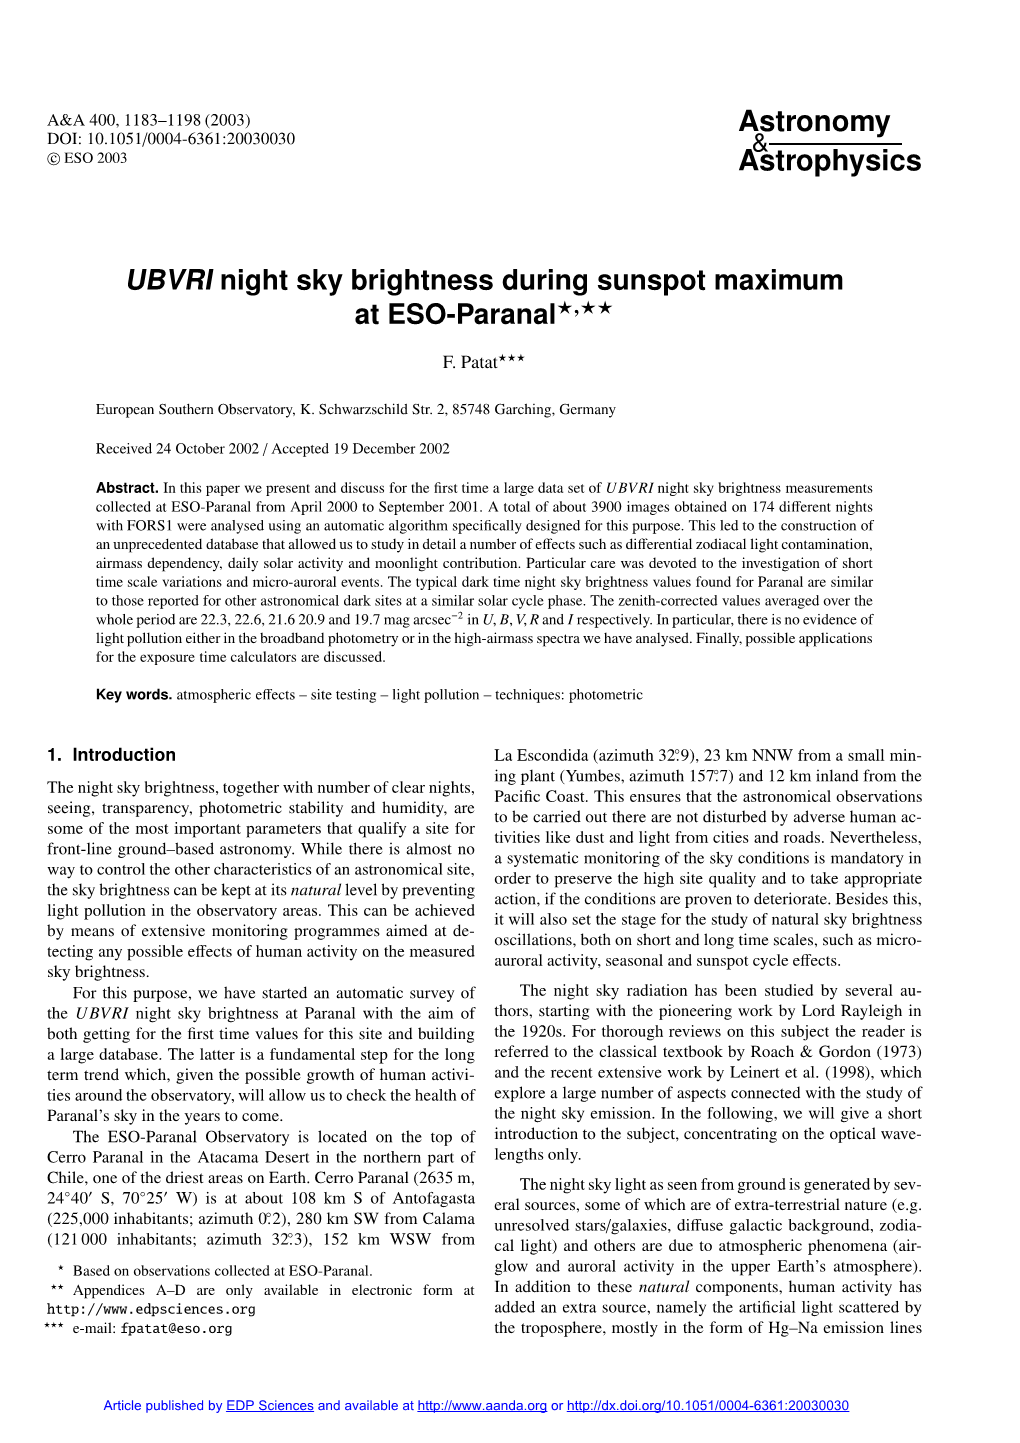 UBVRI Night Sky Brightness During Sunspot Maximum at ESO-Paranal�,